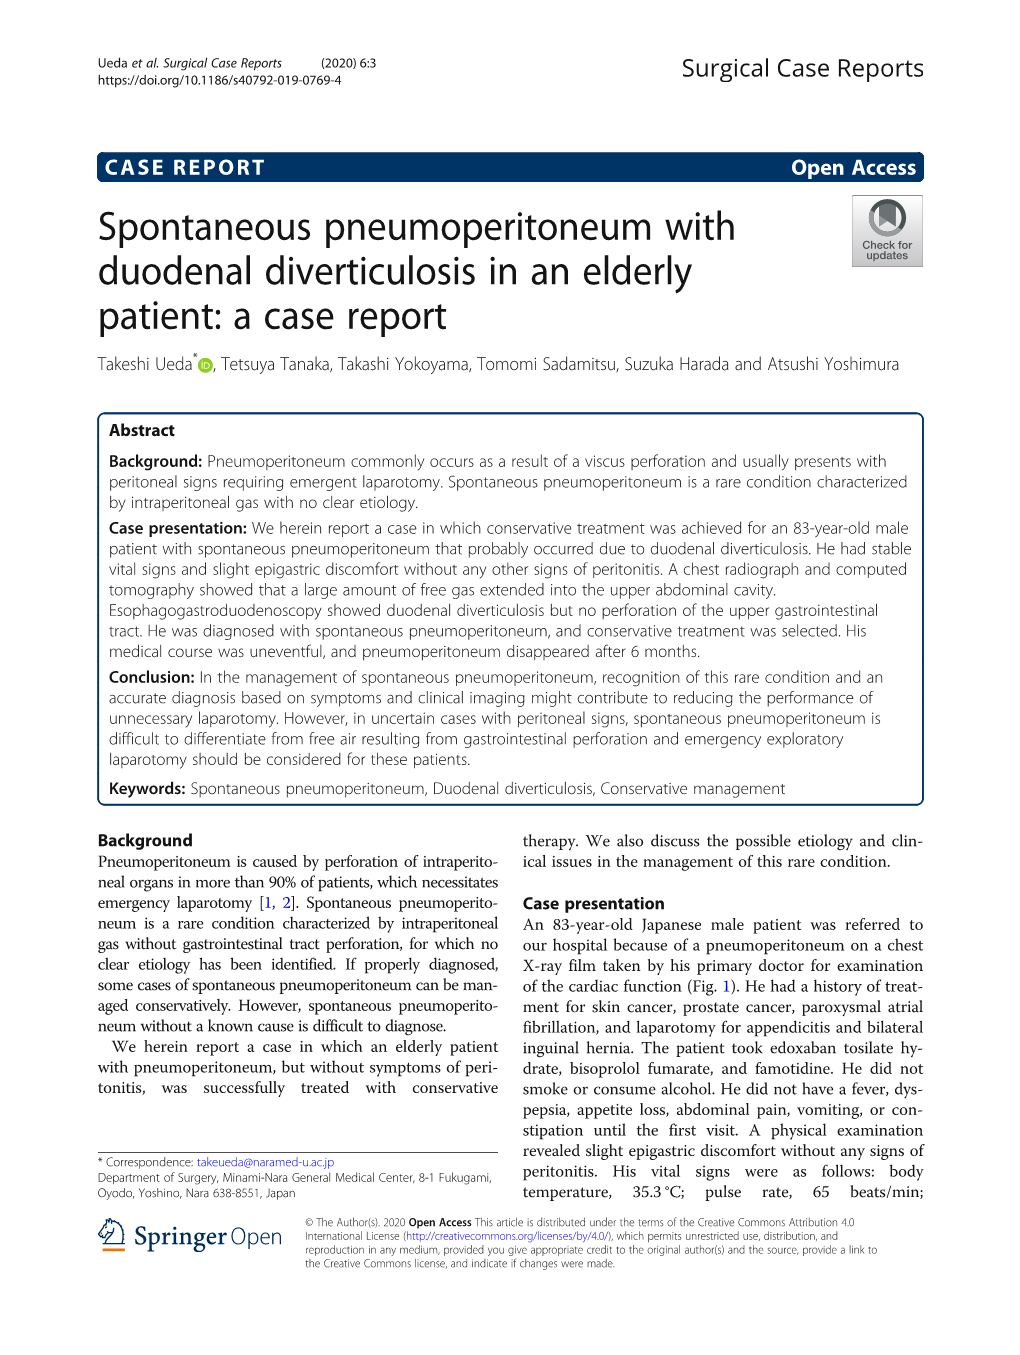 Spontaneous Pneumoperitoneum with Duodenal